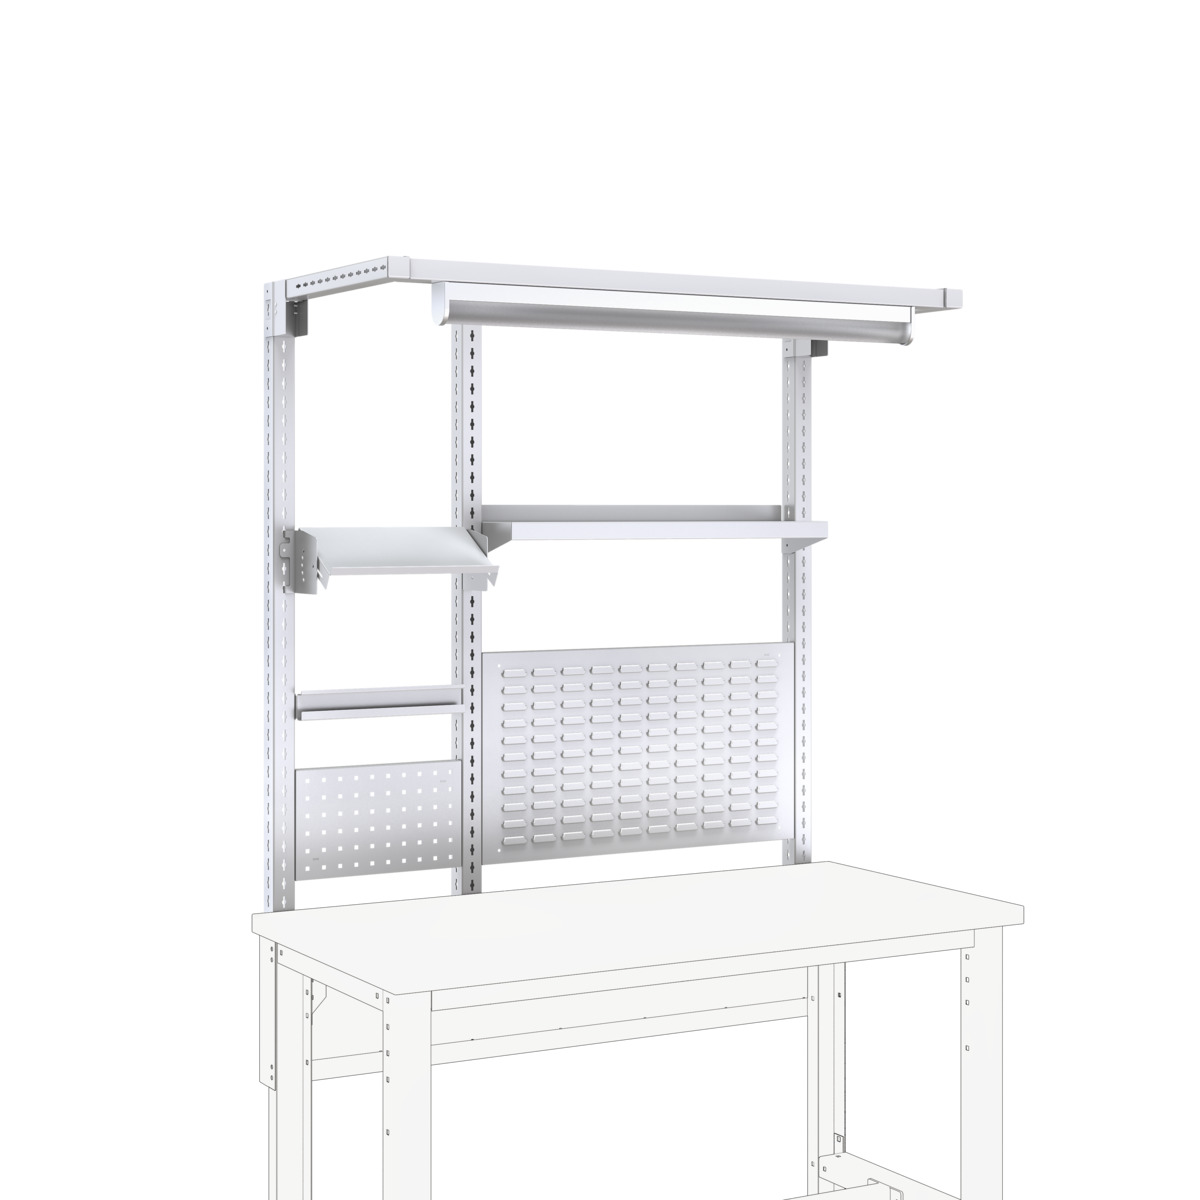 41010186.16 - cubio bench rear frame kit